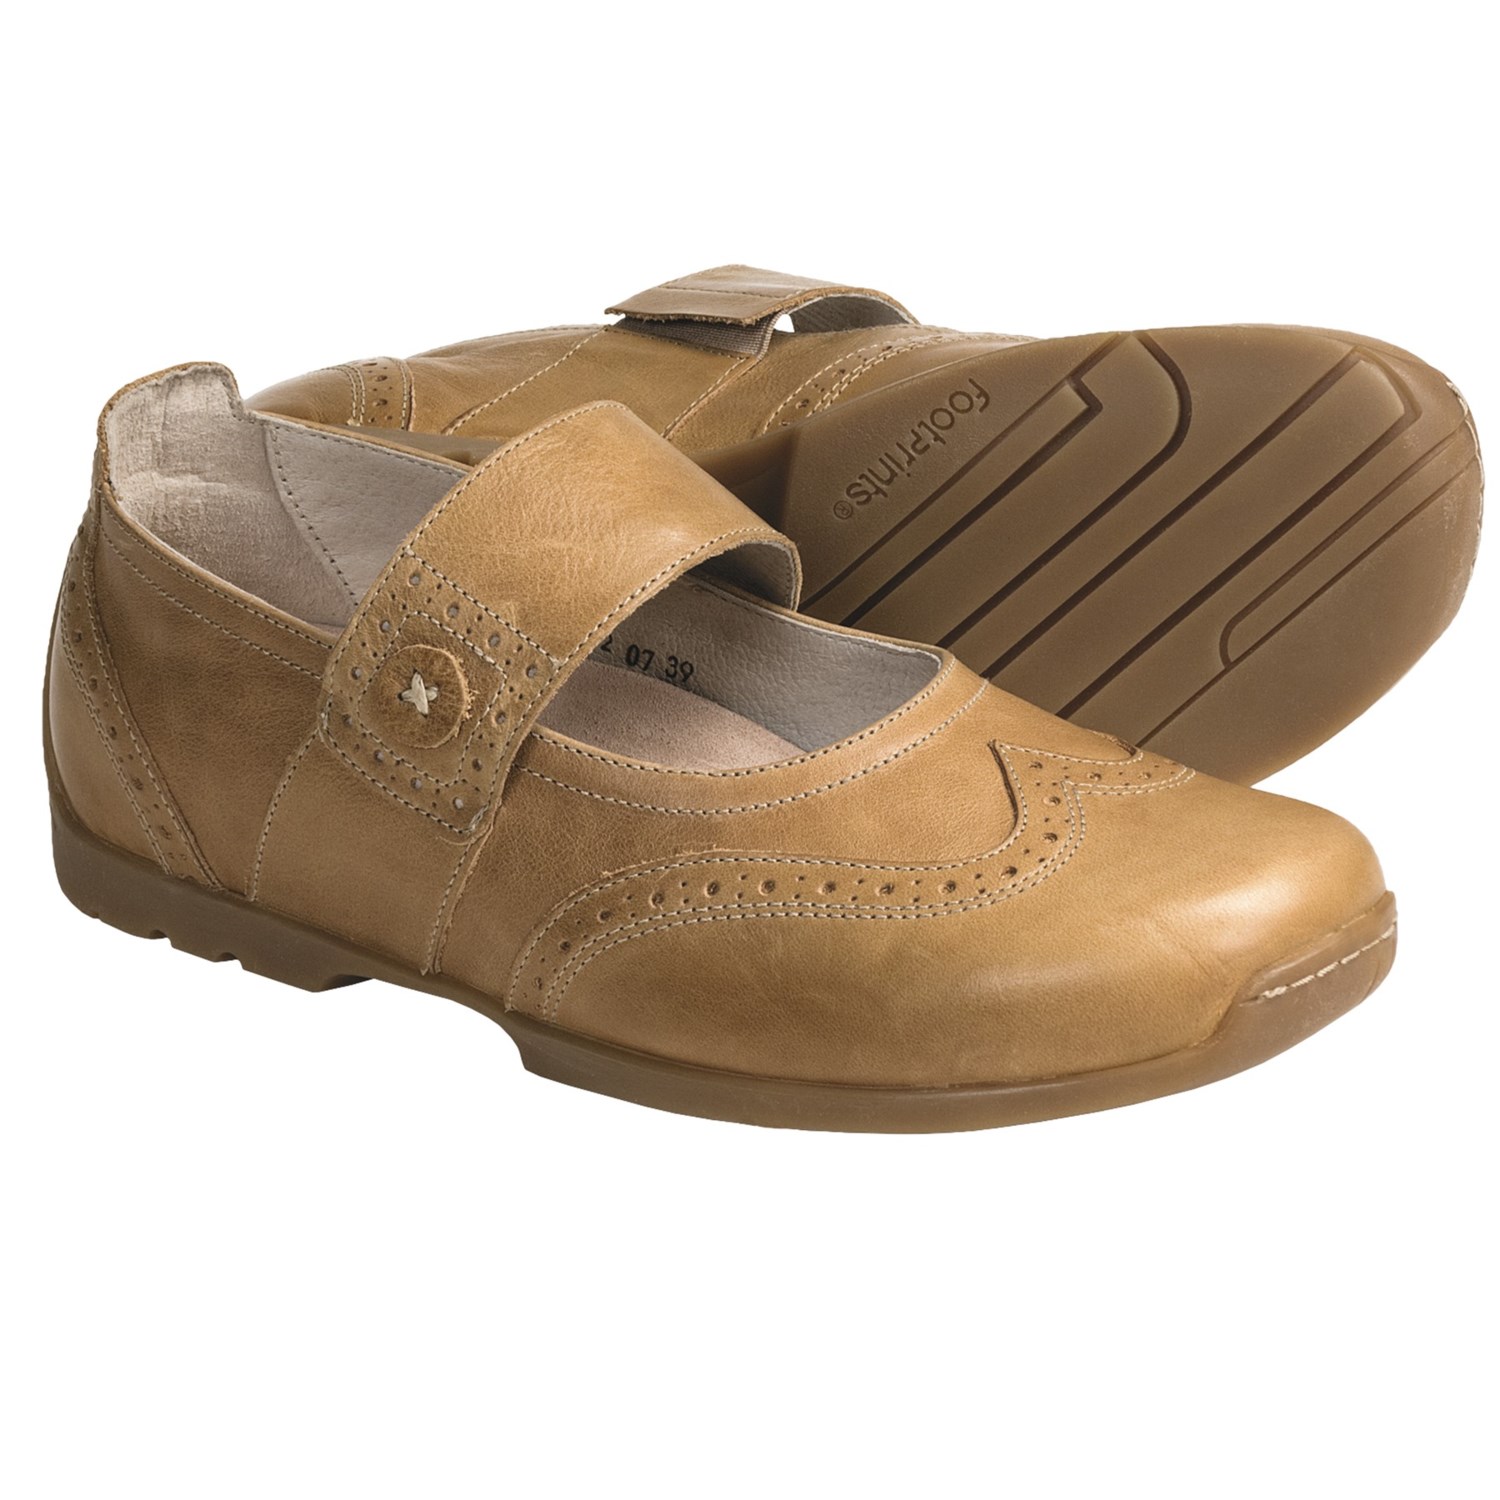 Footprints by Birkenstock Elmira Shoes - Leather (For Women) in Sand